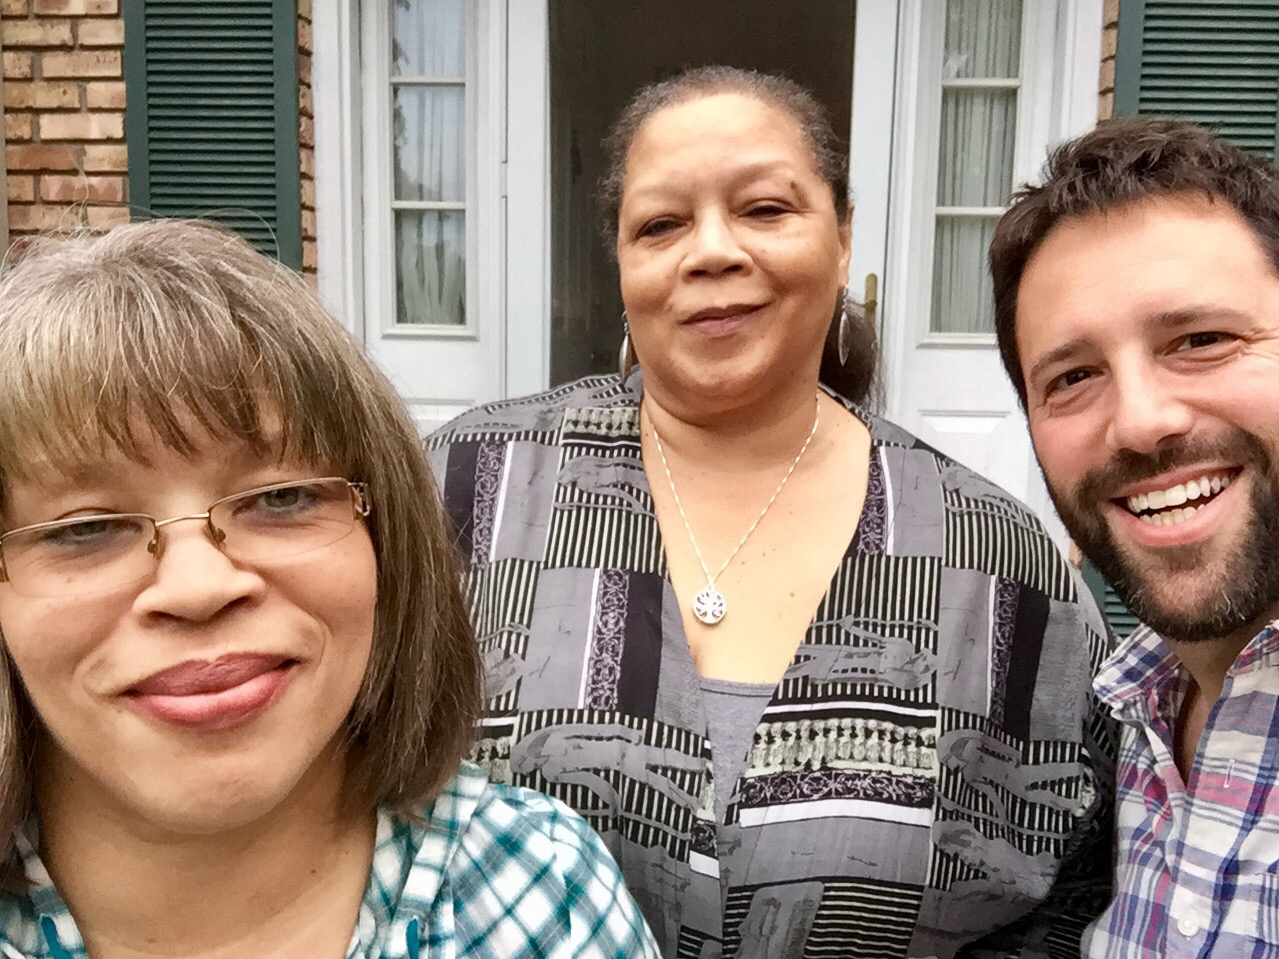 Rosa Parks' nieces Sheila McCauley Keys and Deborah Ann Ross (center) with the author, Dan Pashman.